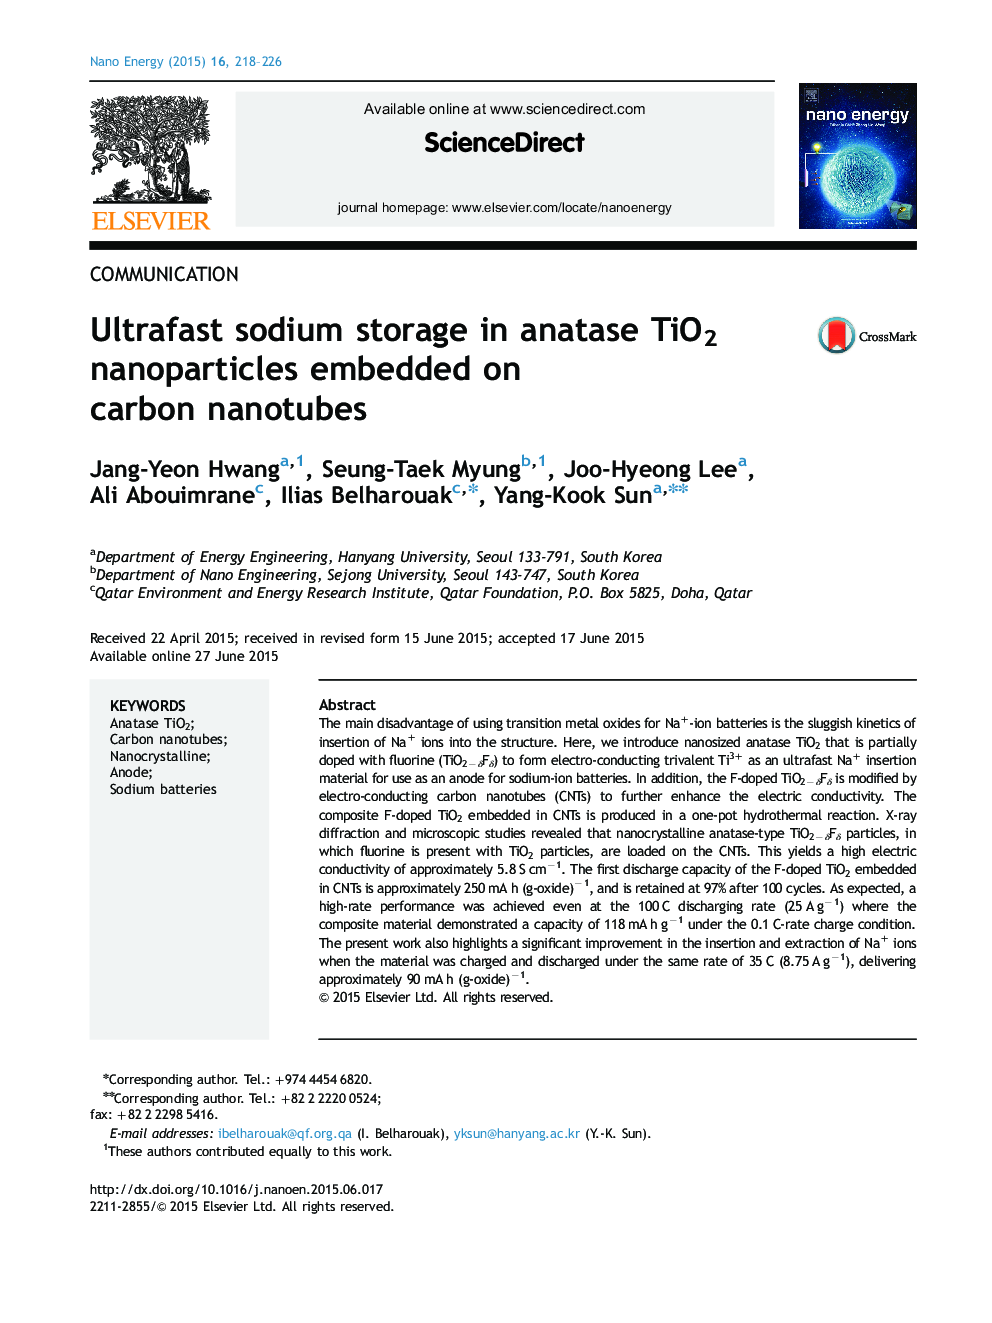 Ultrafast sodium storage in anatase TiO2 nanoparticles embedded on carbon nanotubes